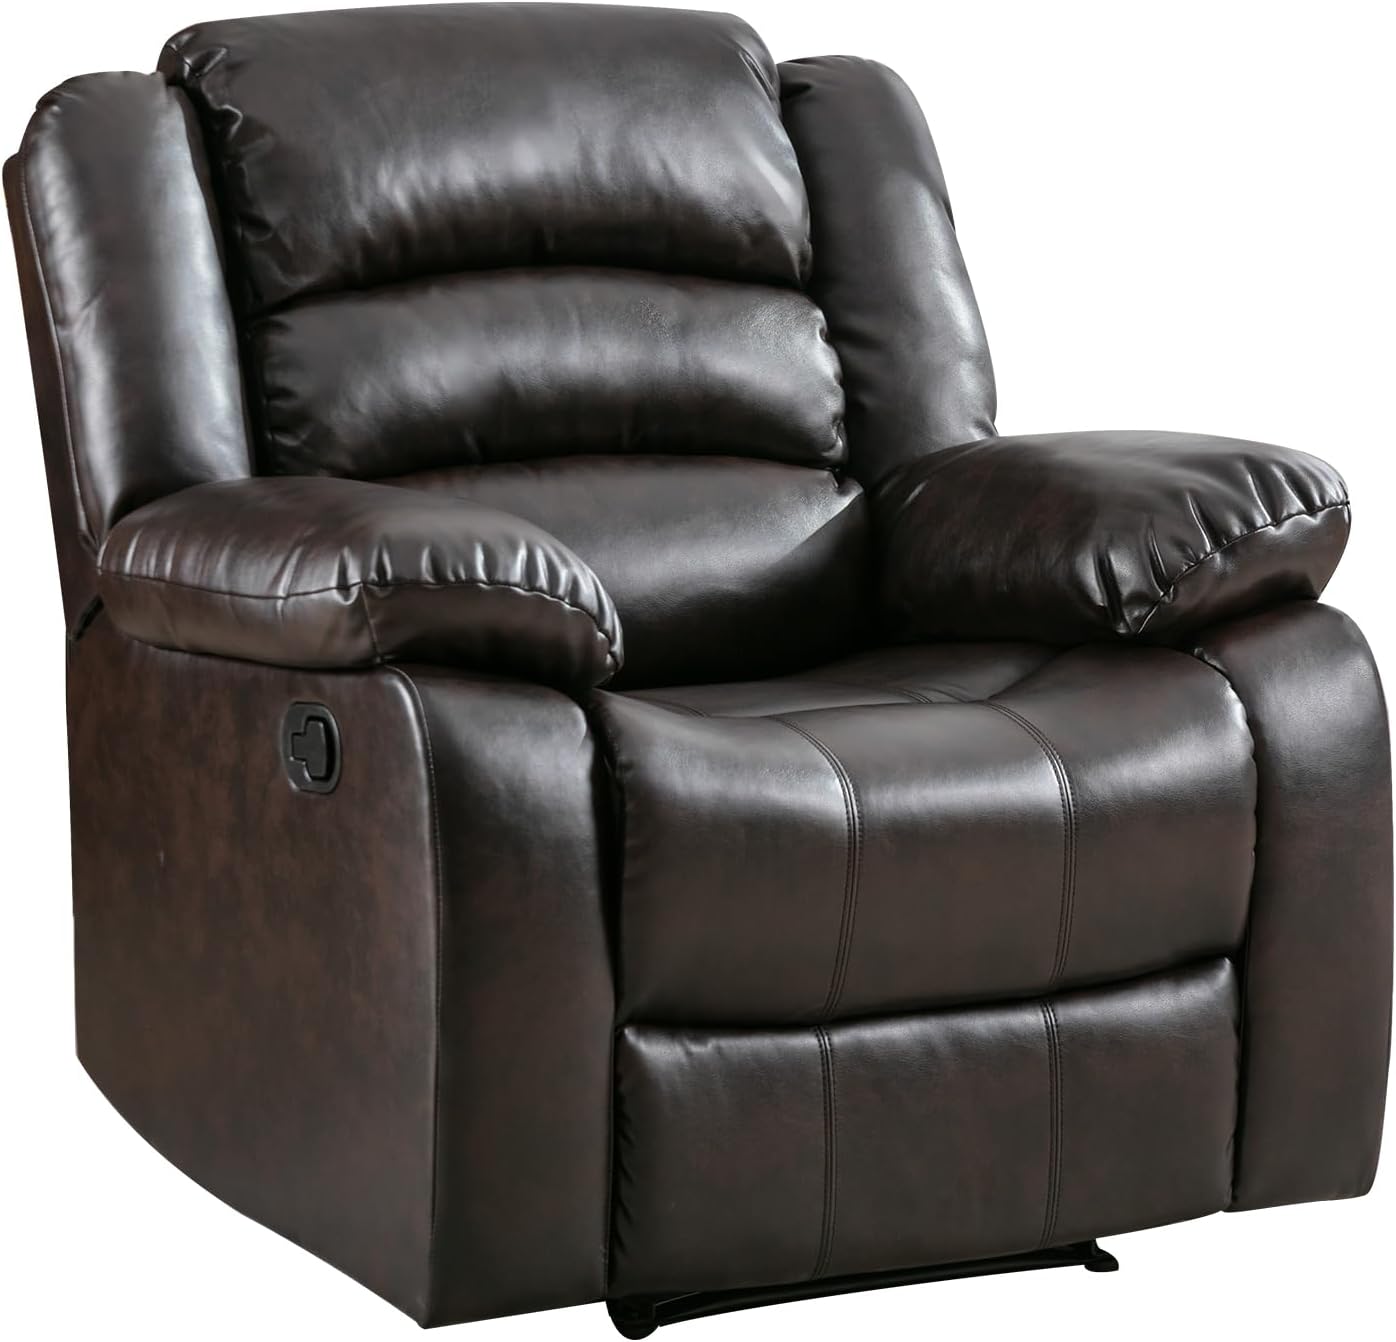 Phoenix Home PU Leather Manual Chair Recliner, Dark Brown